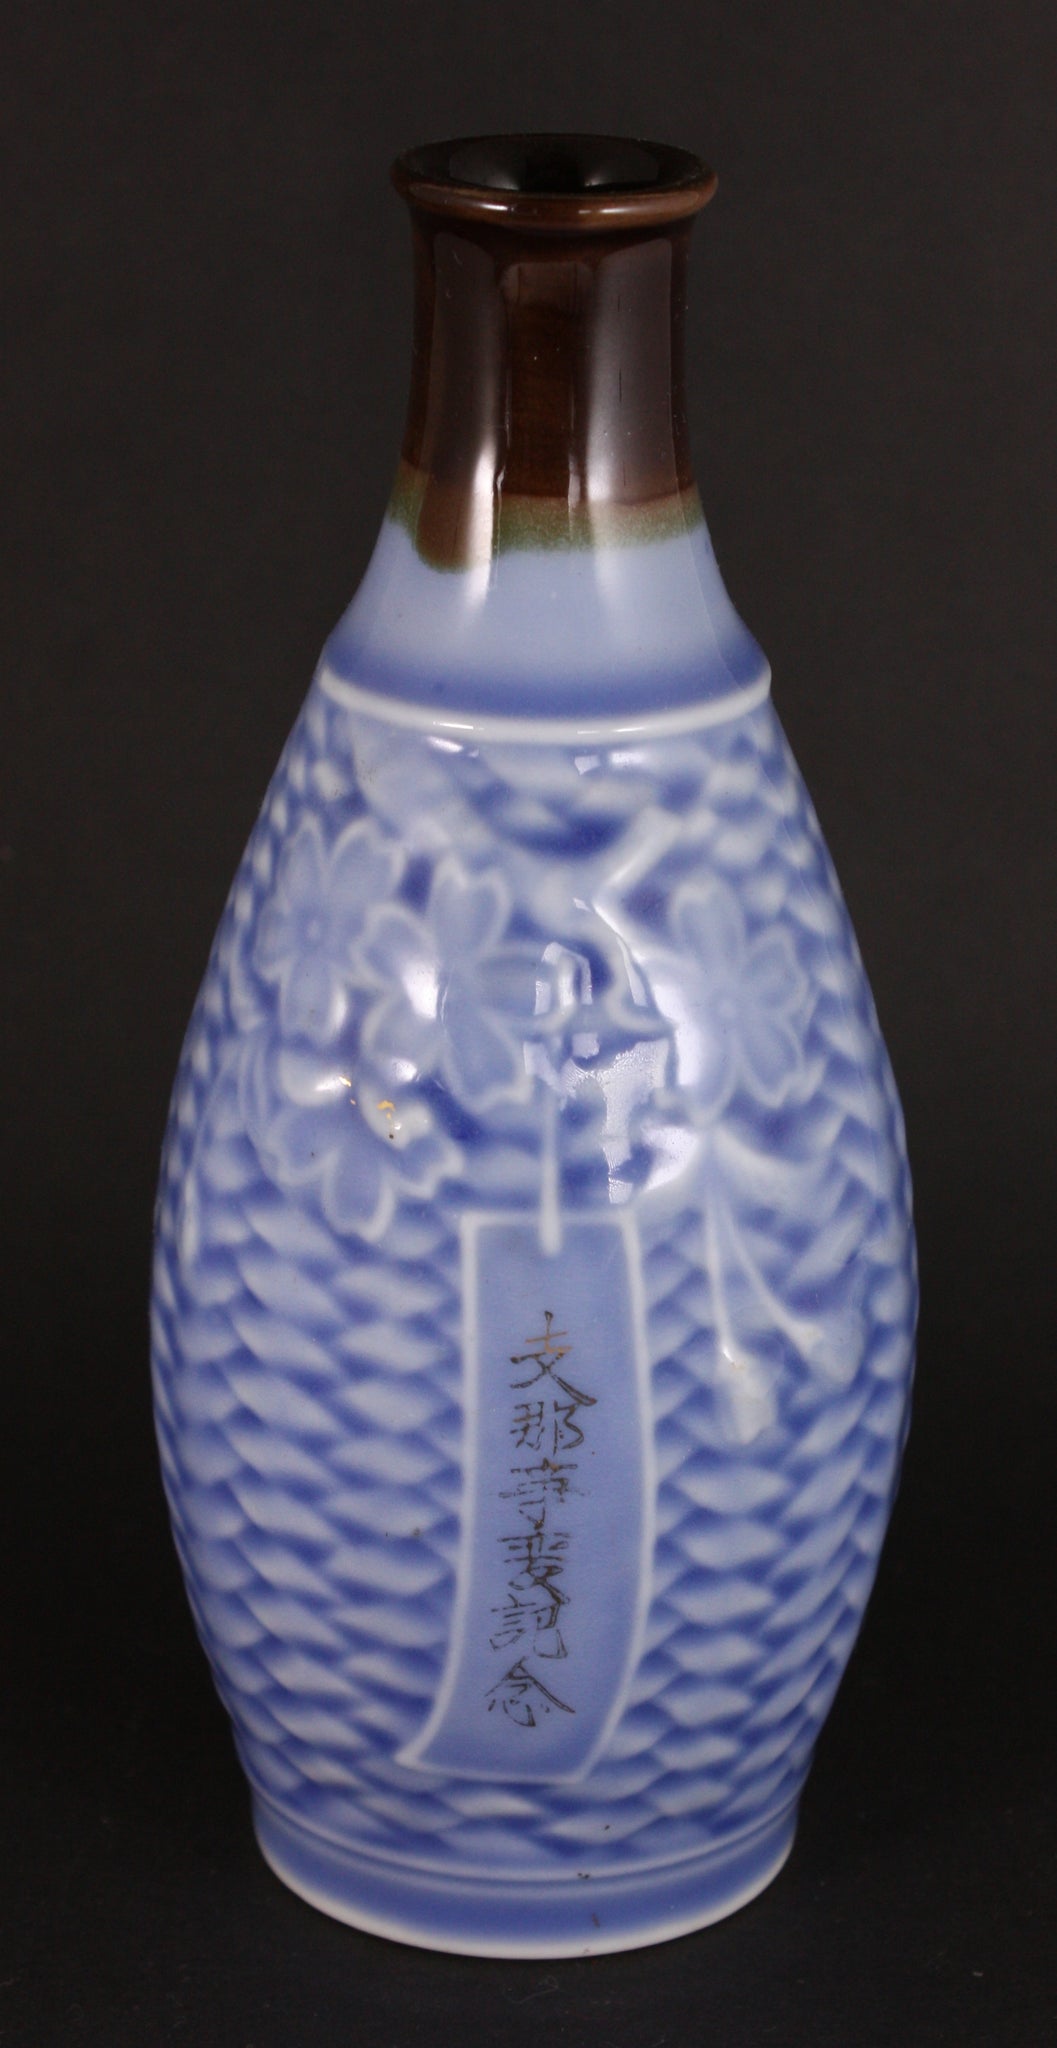 Antique Japanese Military Chinese City Gate Army Sake Bottle